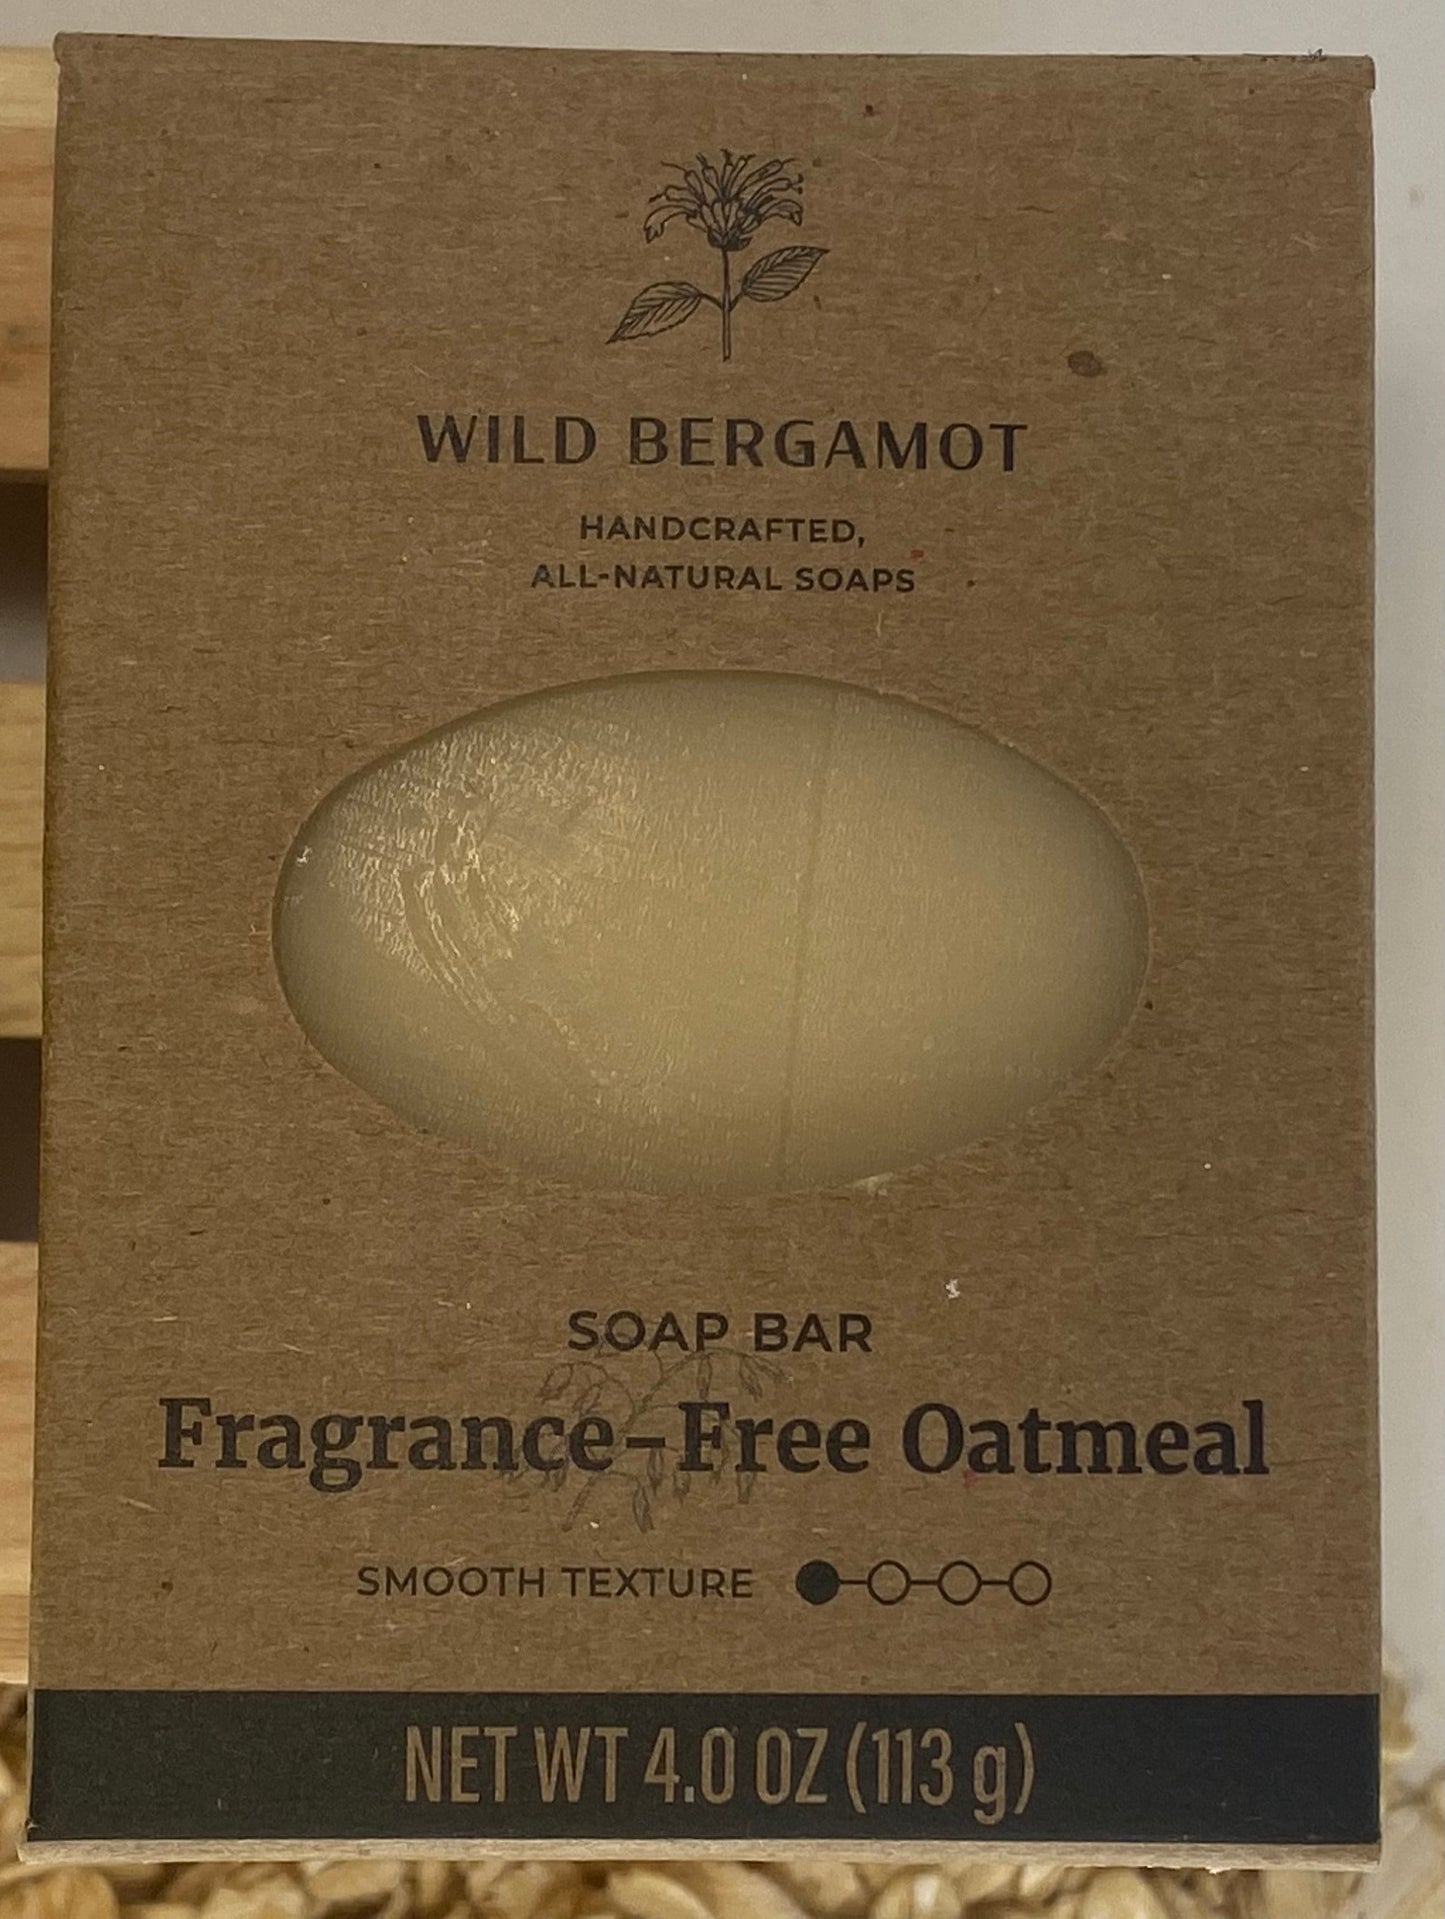 Fragrance-Free Oatmeal Soap Bar